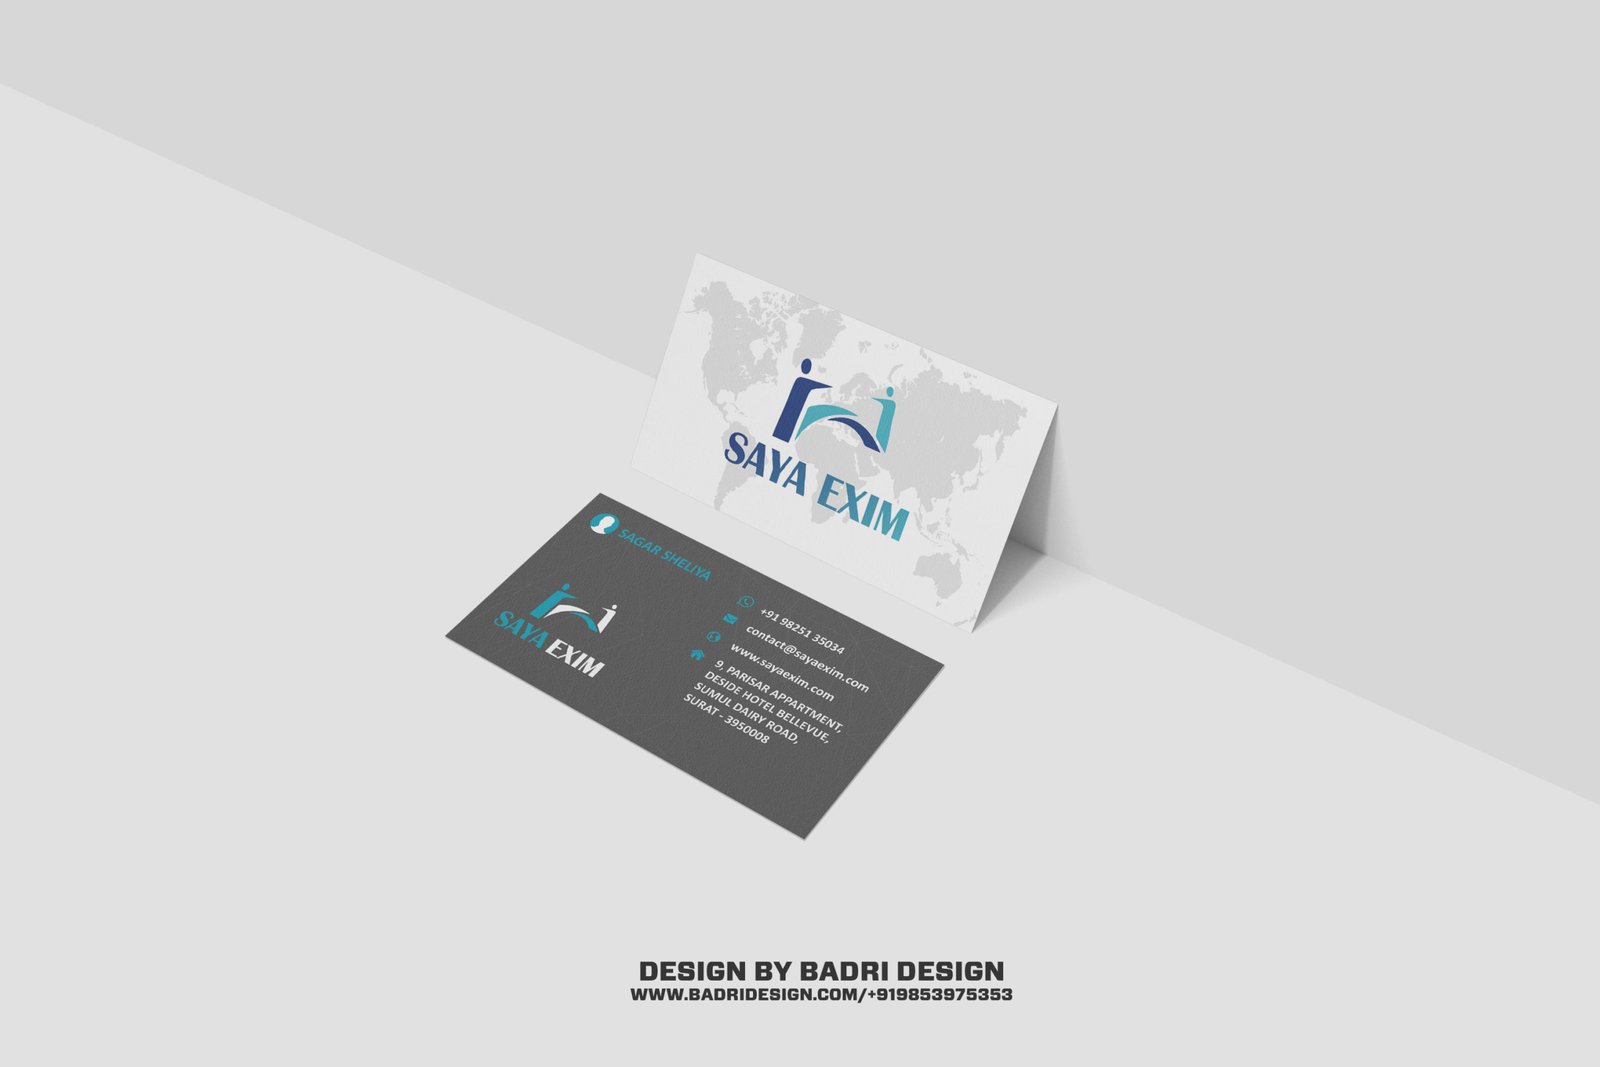 Saya Exim creative world business design Badri design